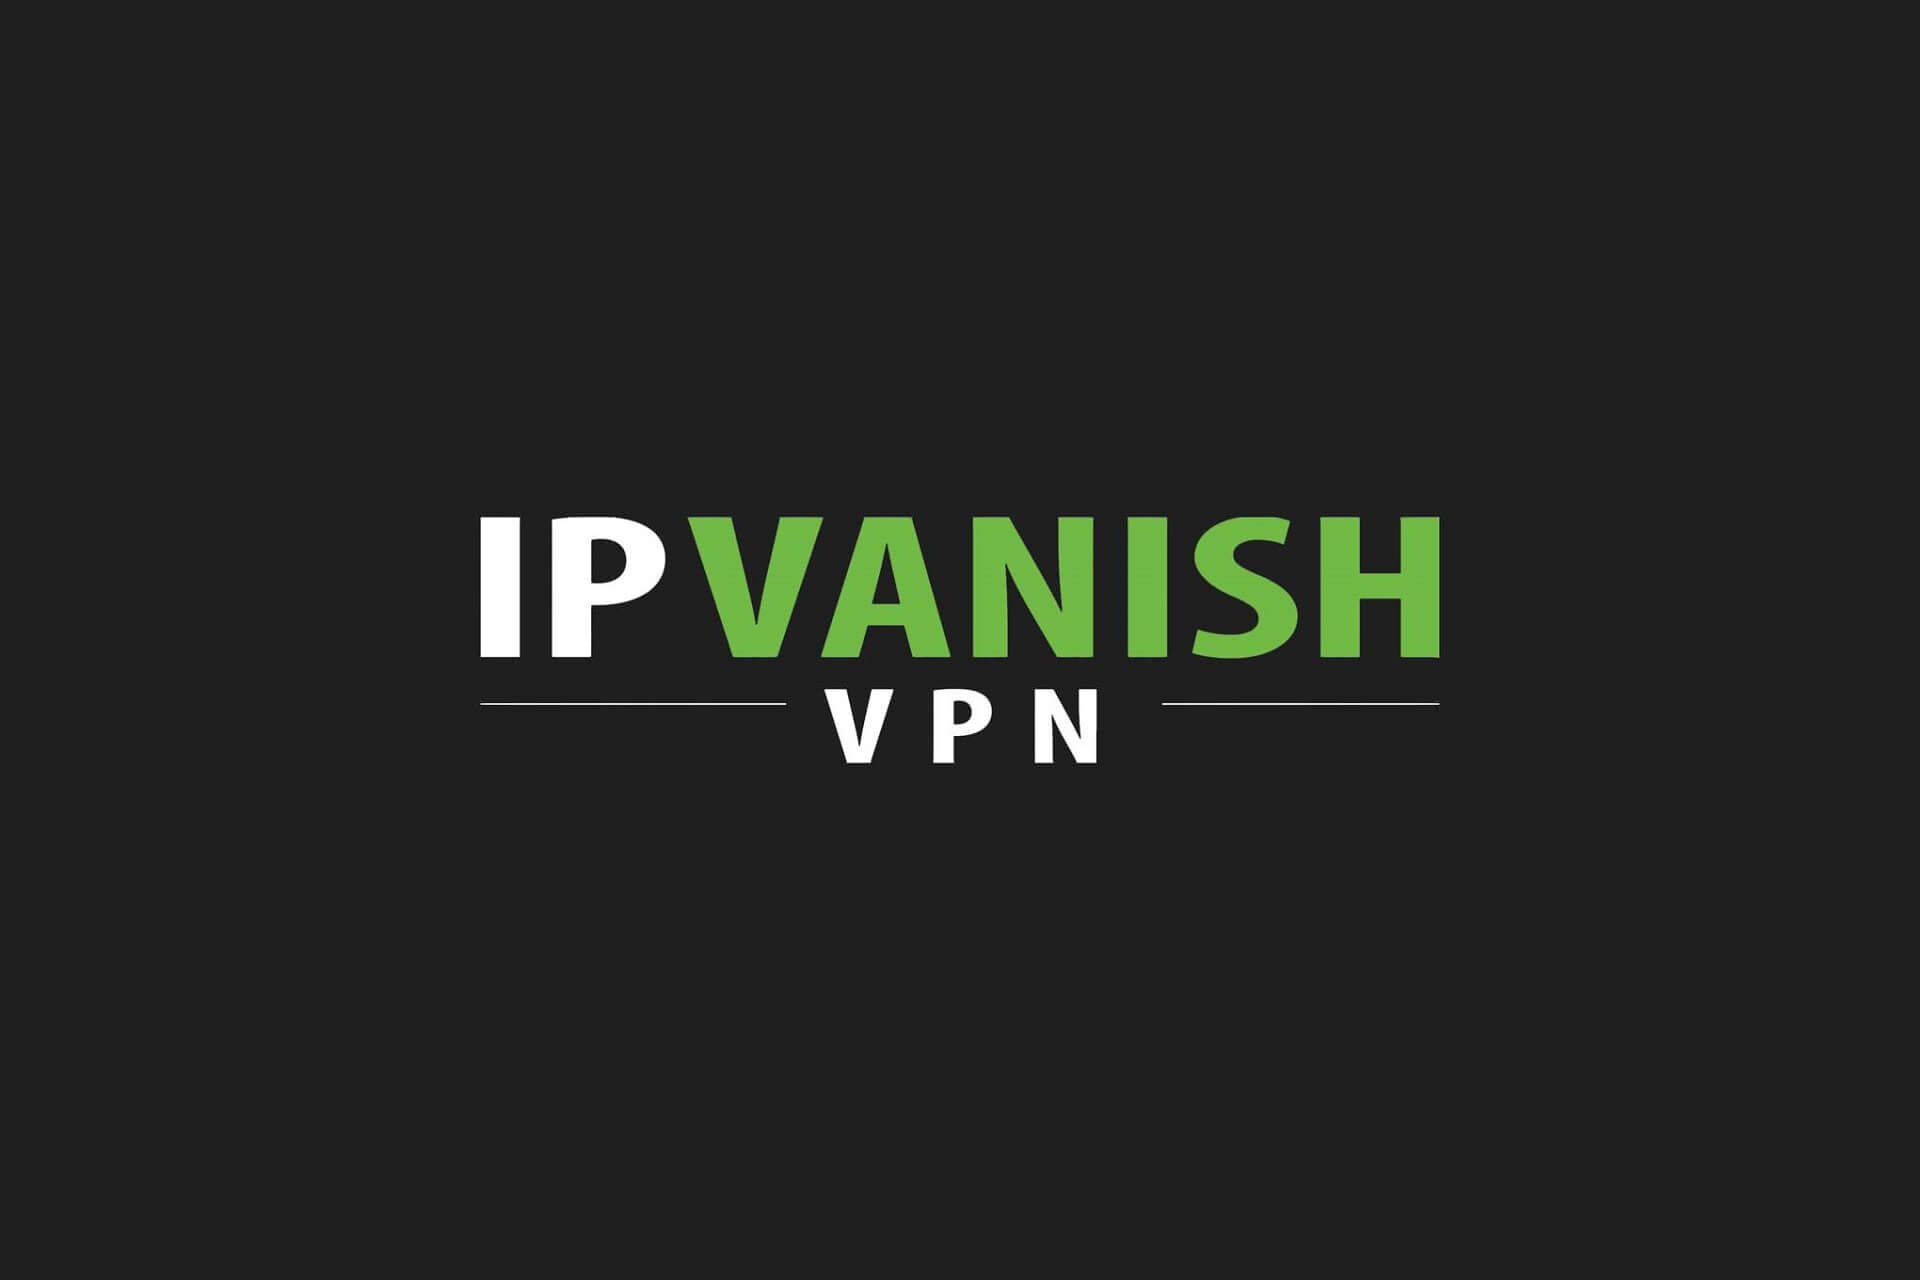 IPVanish error 1200 pops-up